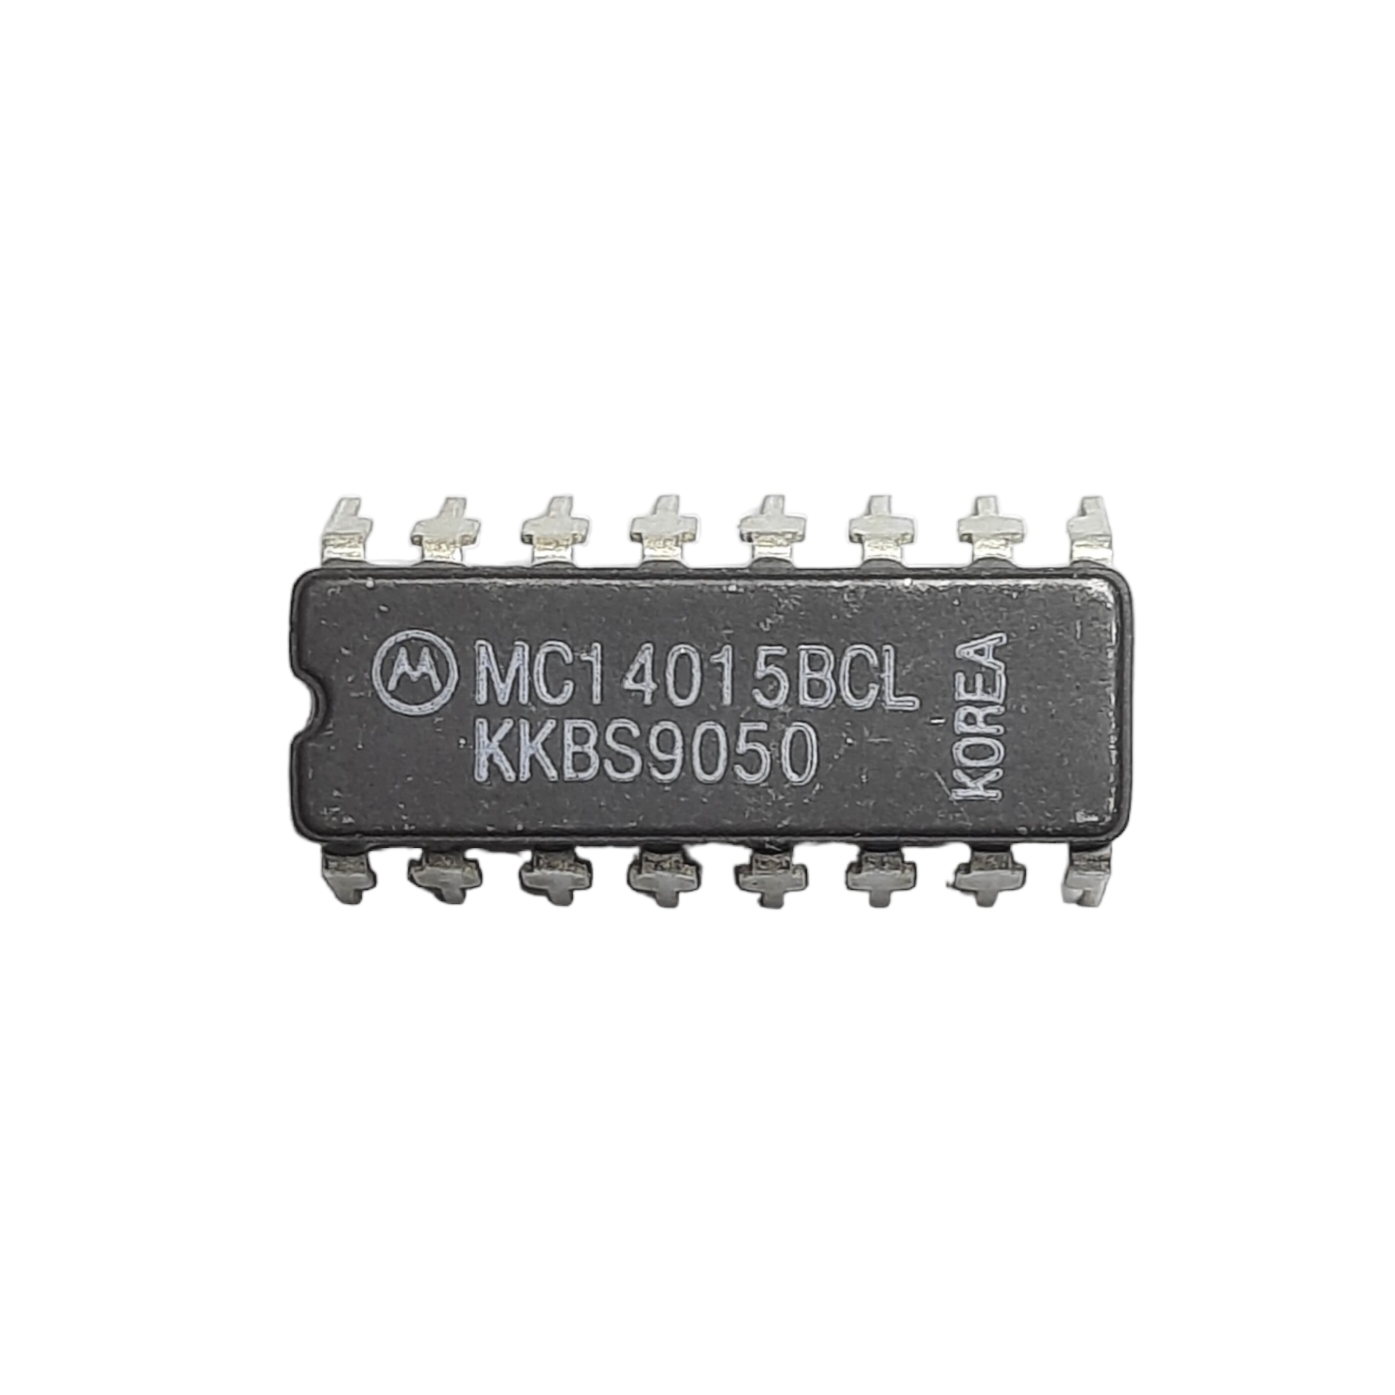 MC14015BCL